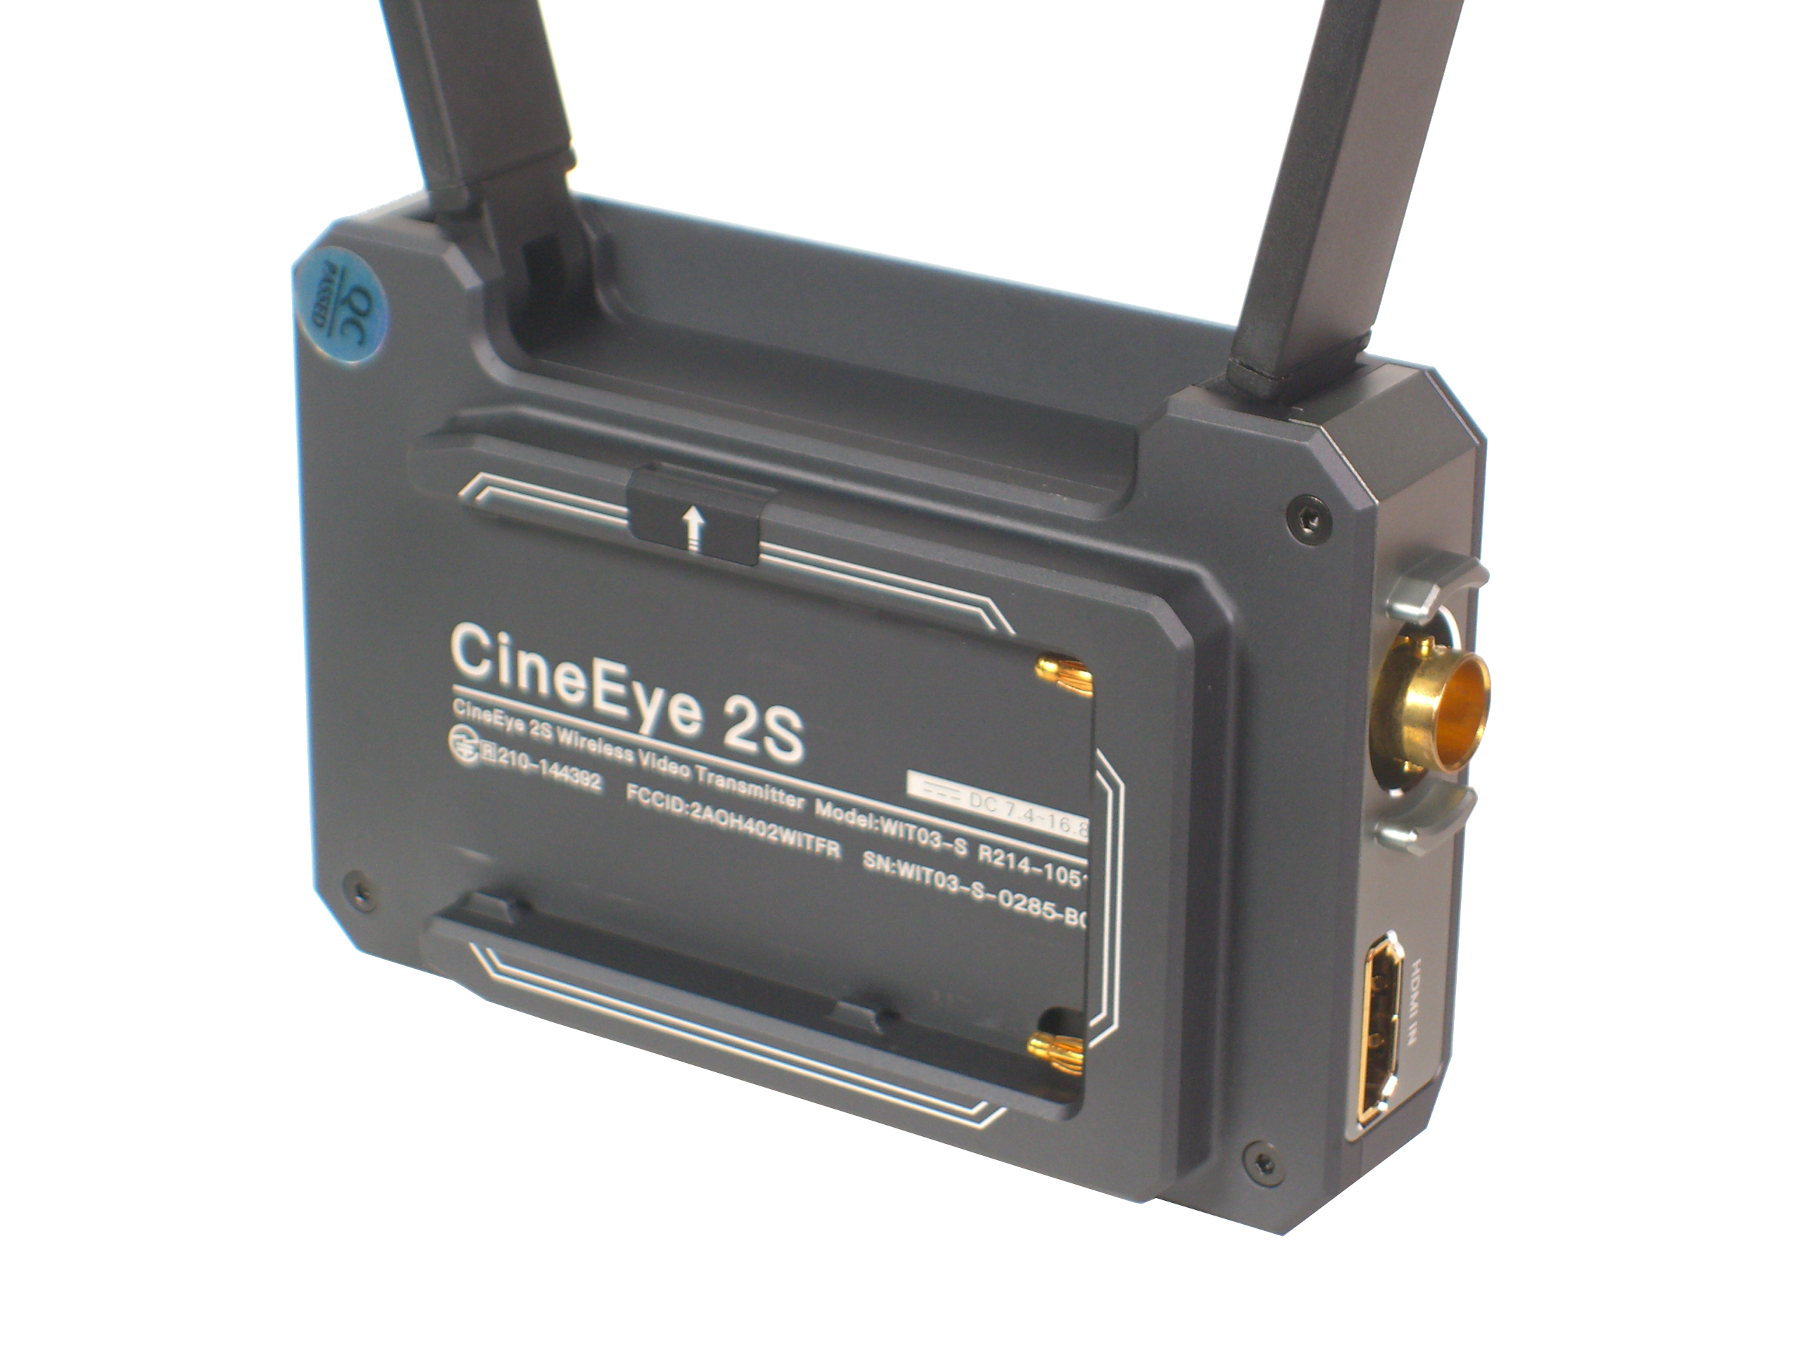 Accsoon CineEye 2S Wireless SDI/HDMI Video Transmitter with 5 GHz 